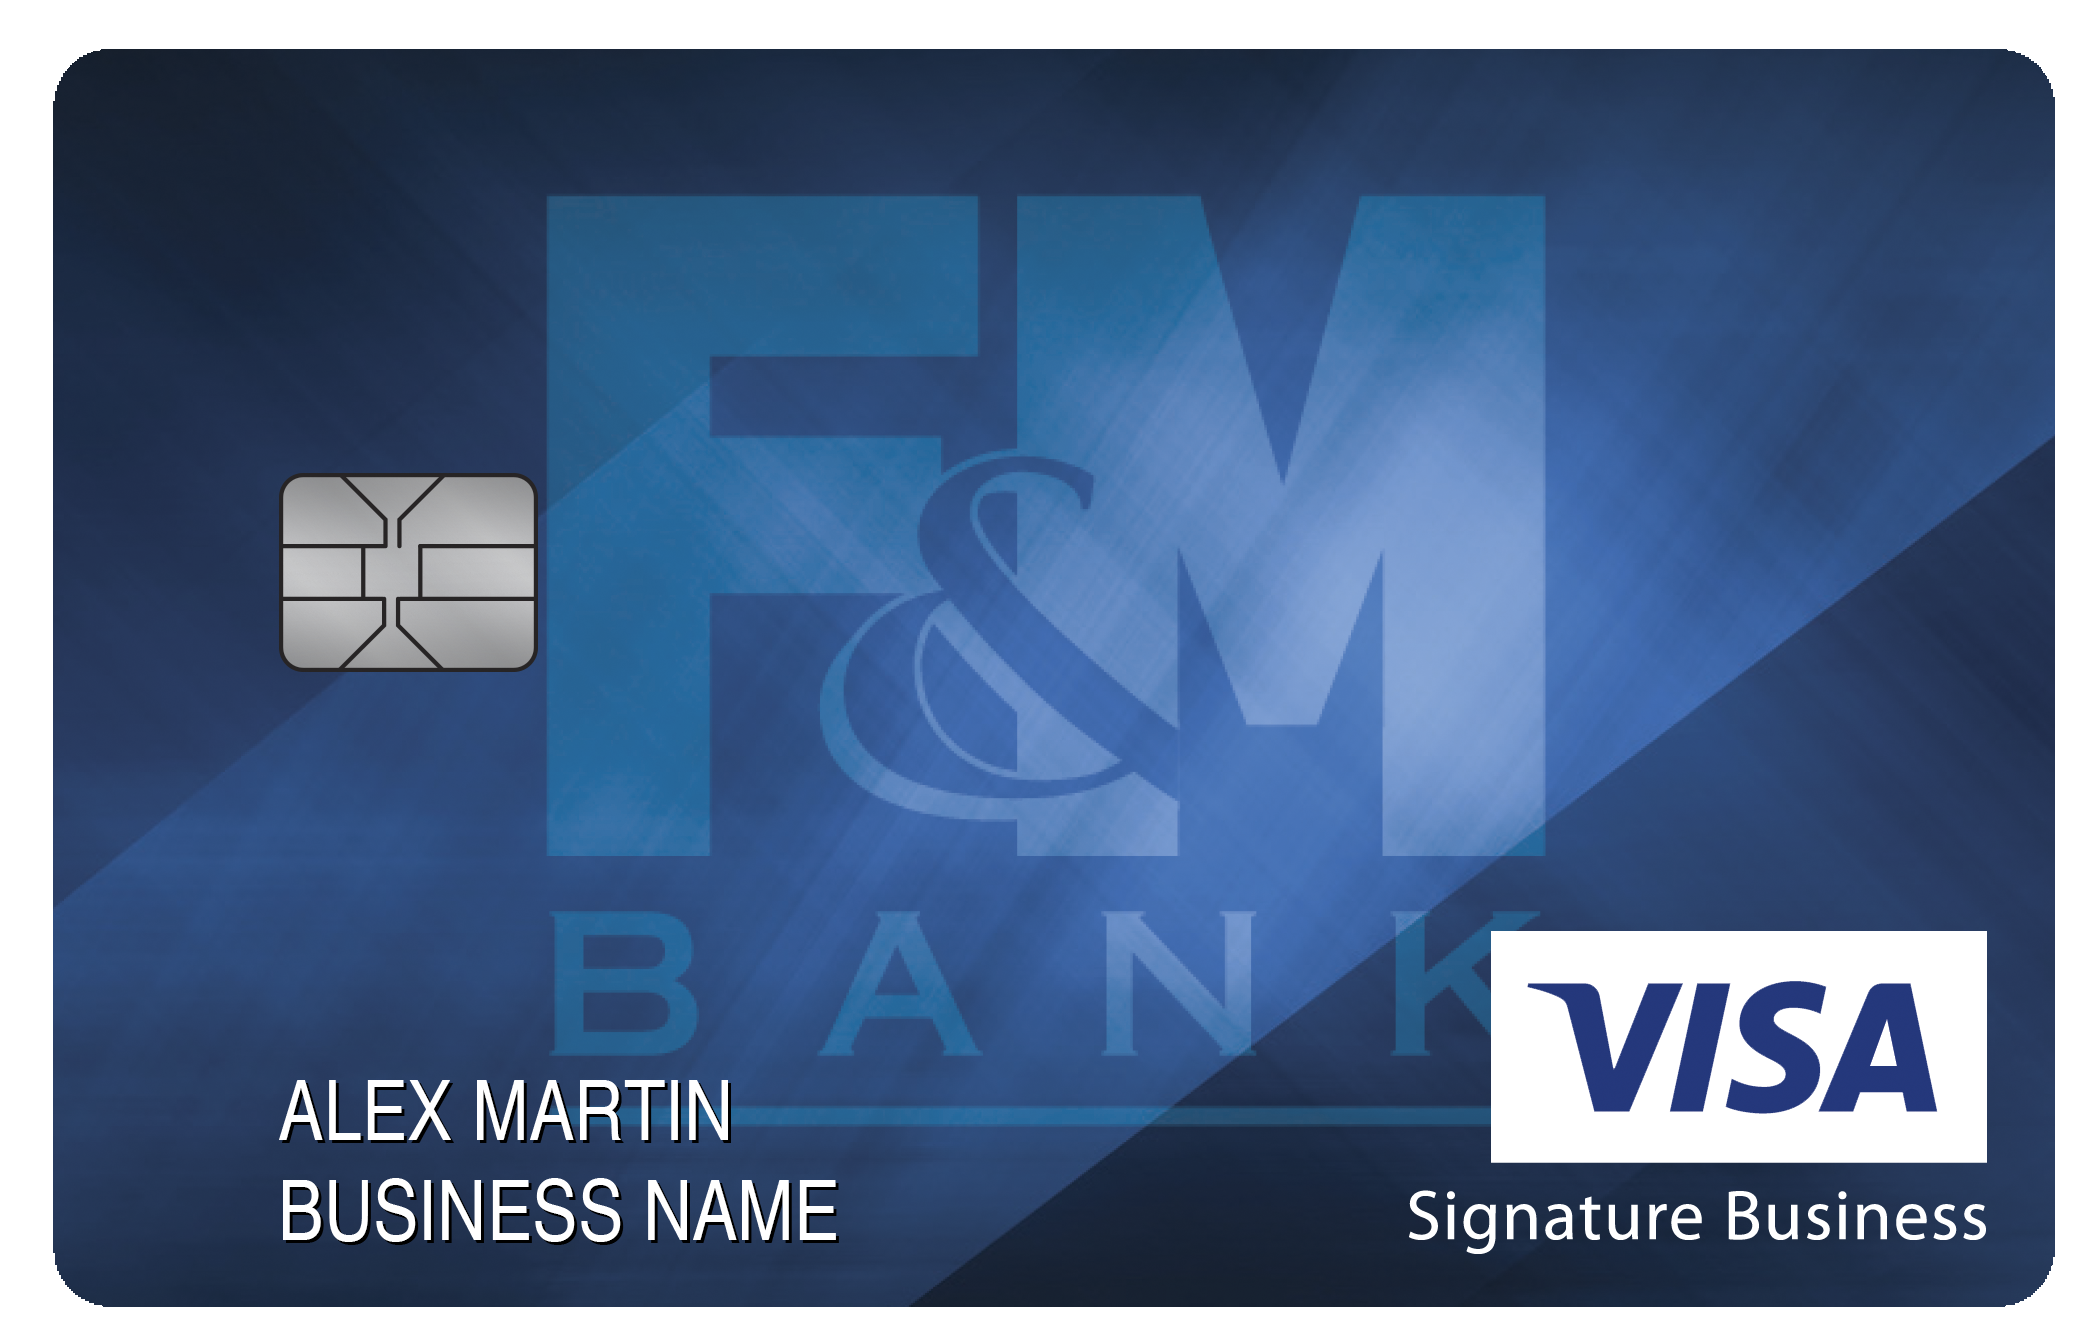 F&M Bank Smart Business Rewards Card